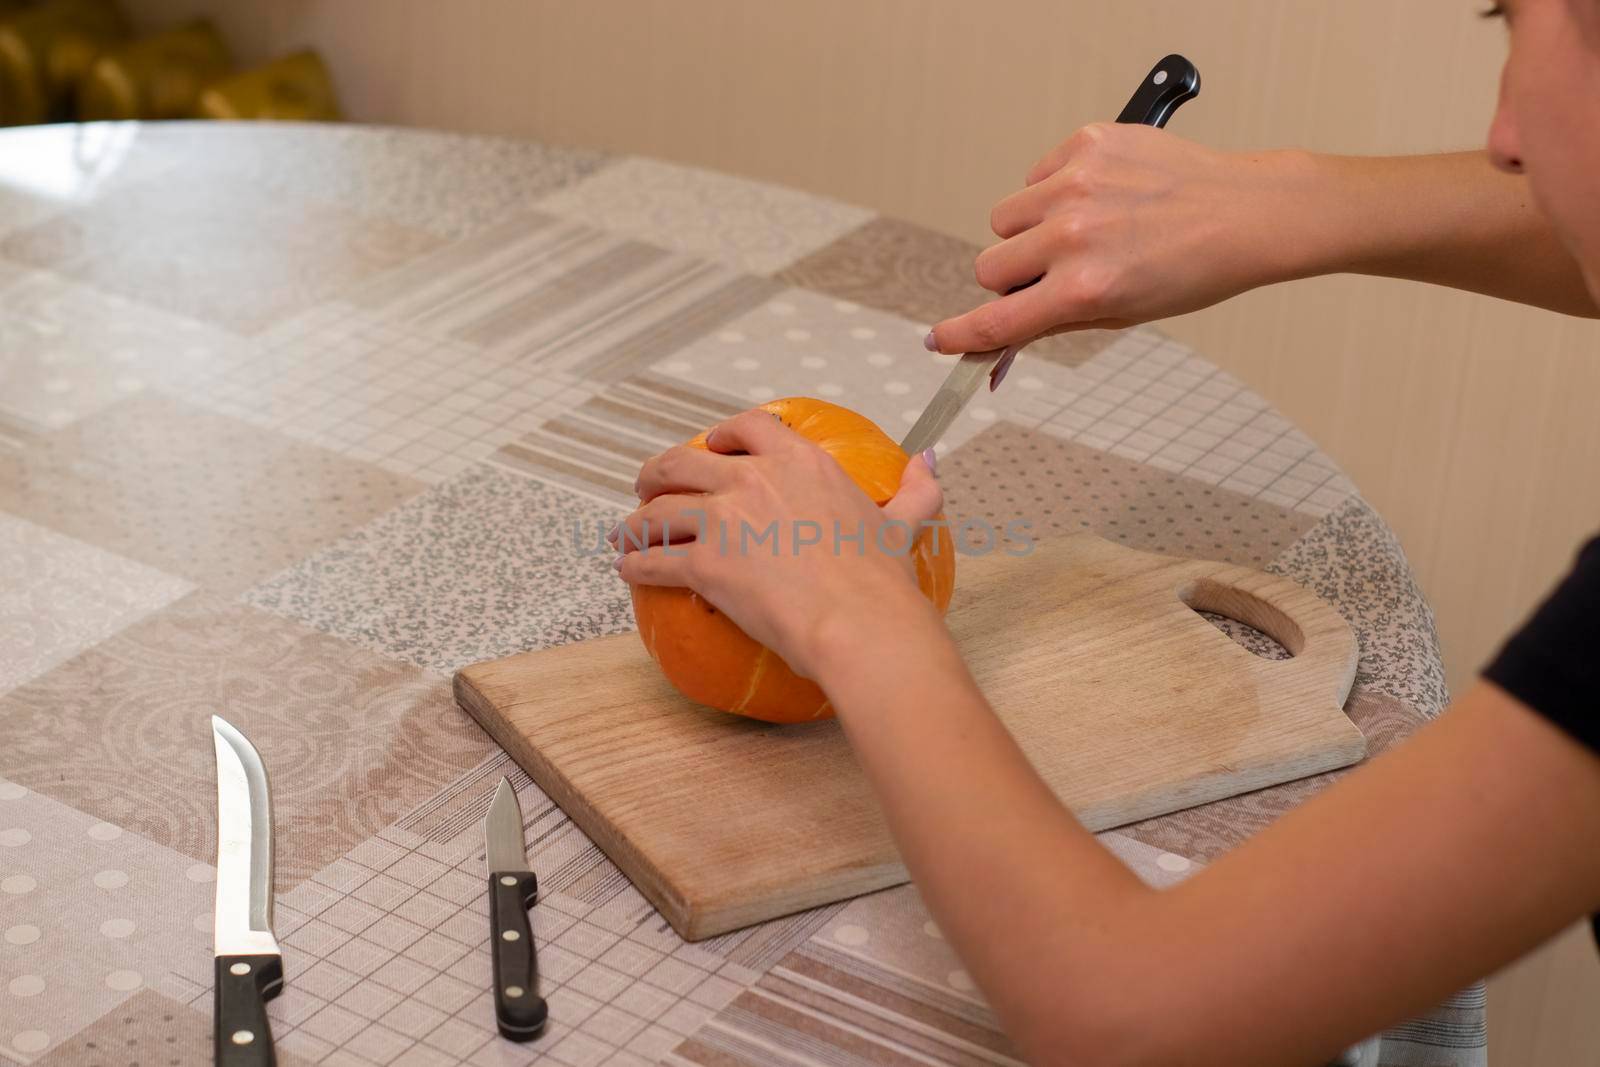 the process of making a Halloween pumpkin. horror theme and Hallowe'en.